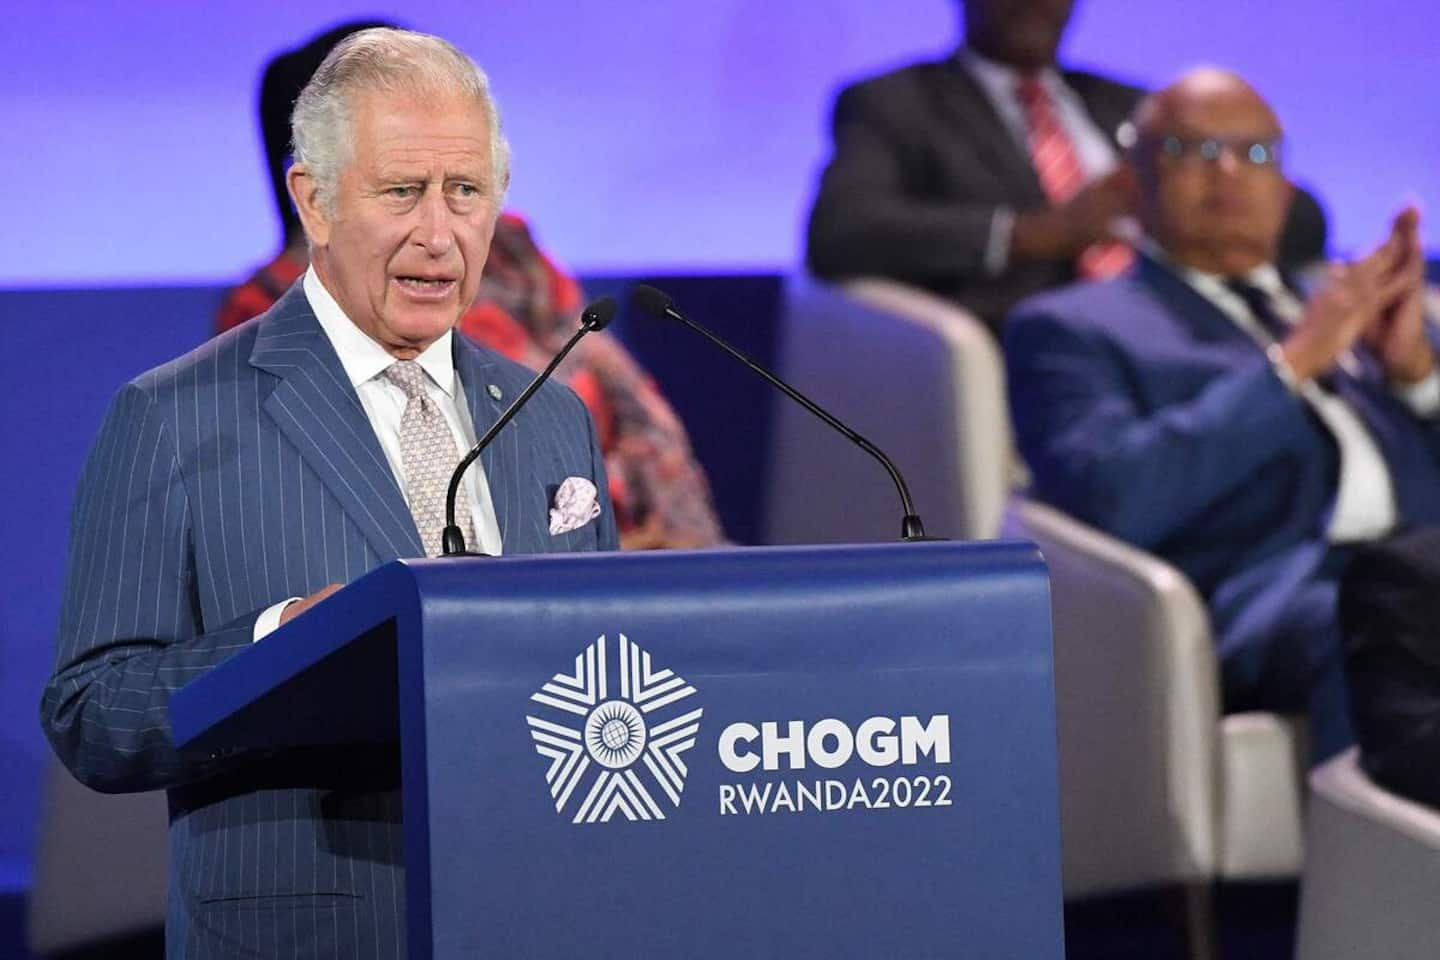 Commonwealth countries free to abandon monarchy, says Prince Charles